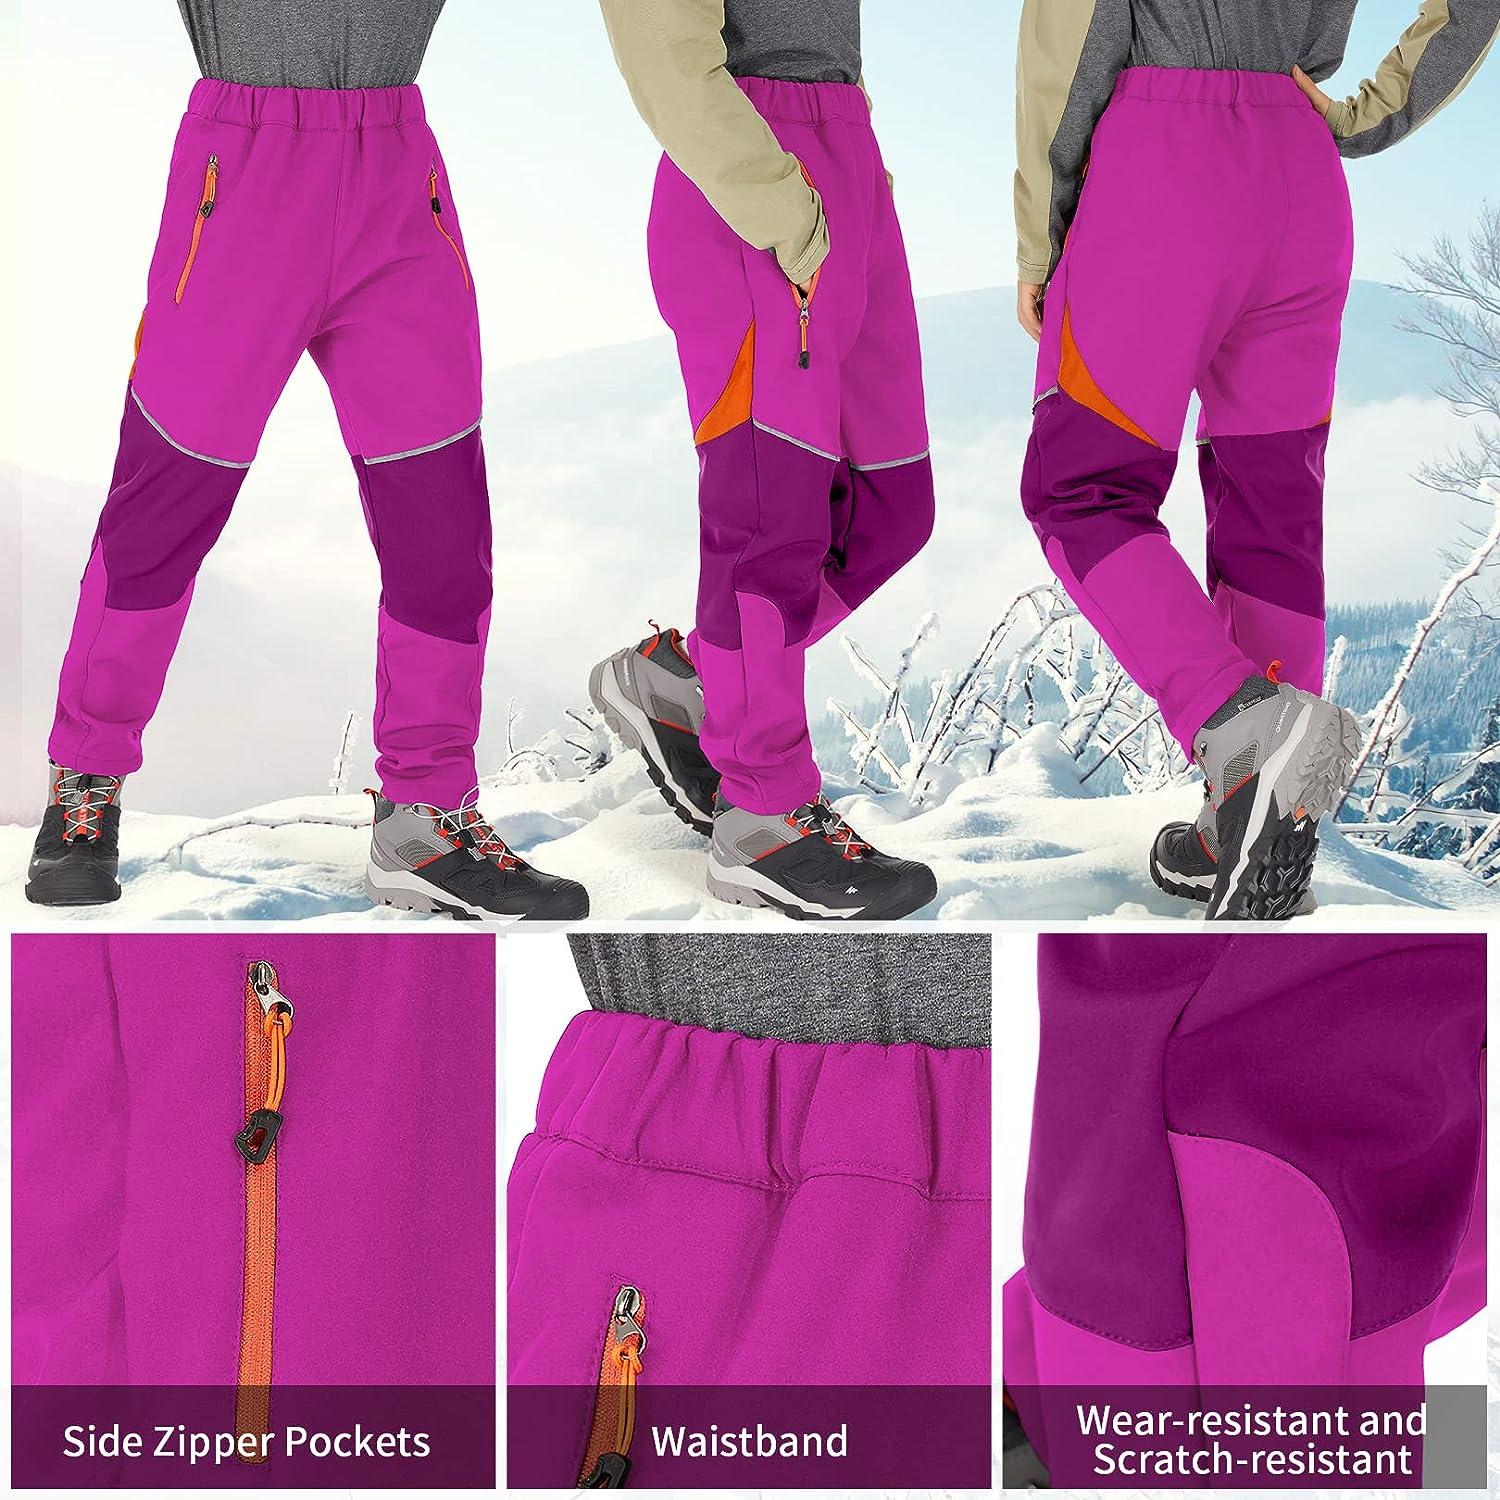 Toomett Boys Snow Waterproof Hiking Pants,Girls Kids ski Outdoor Fleece- Lined Soft Shell Insulated Winter Pants,1510,Rose-3XL(18 Years)